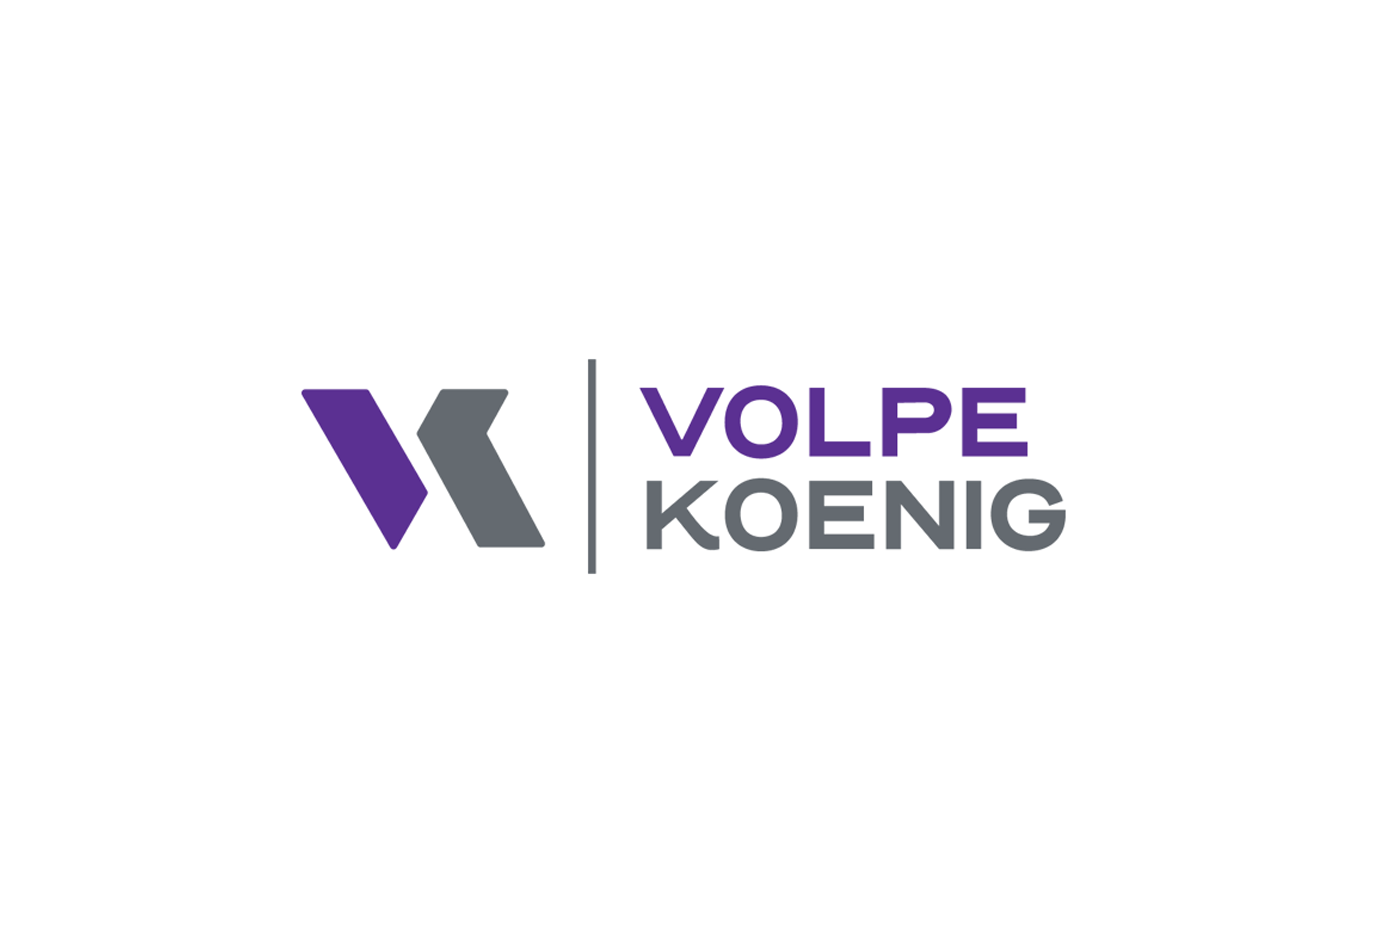 Volpe Koenig logo